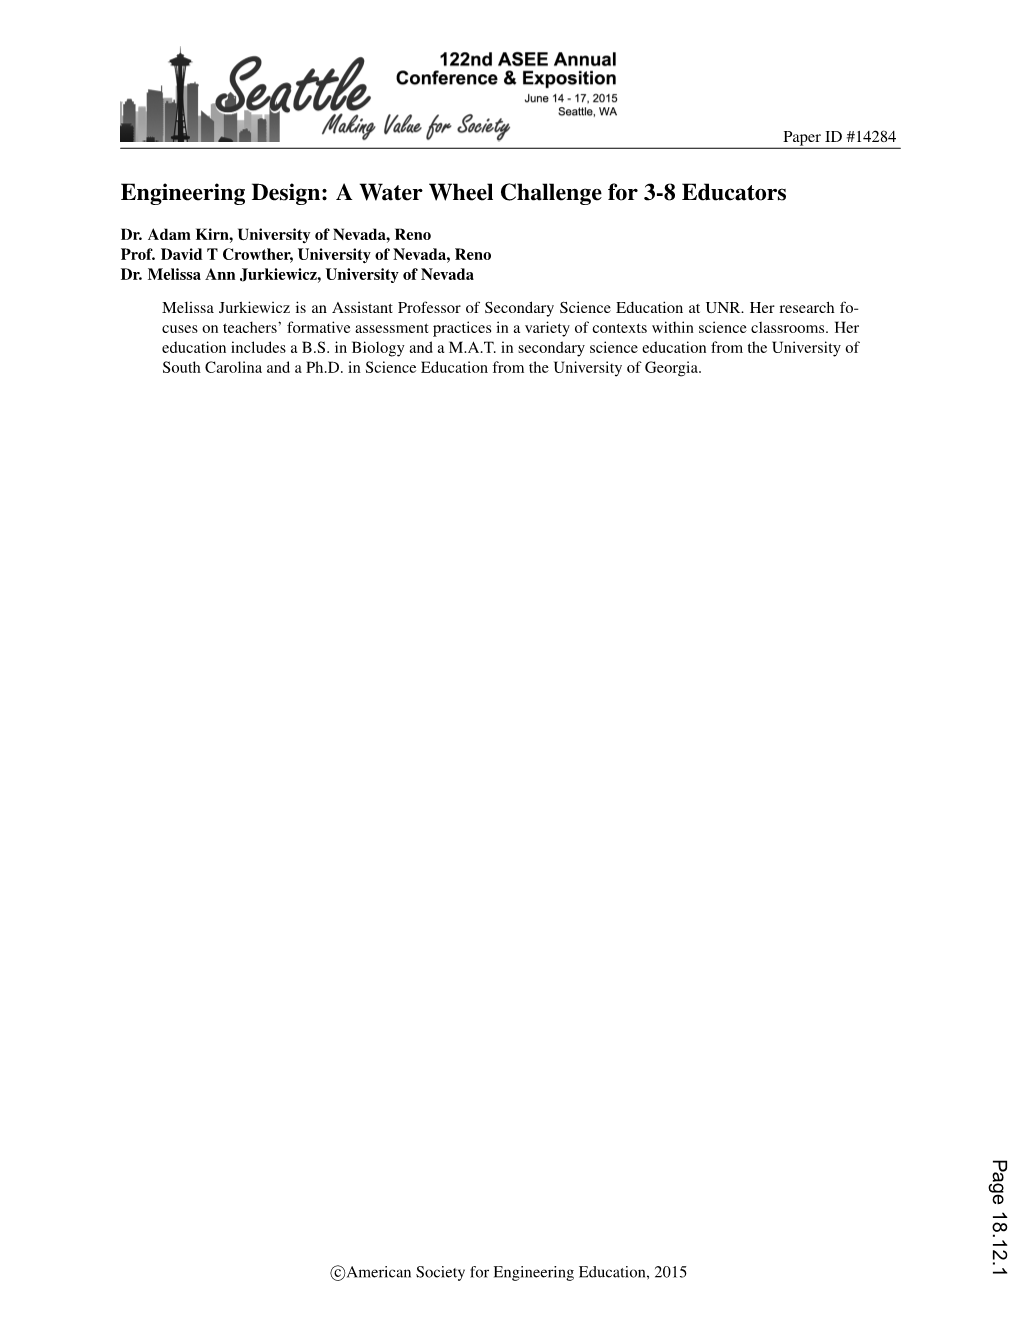 Engineering Design: a Water Wheel Challenge for 3-8 Educators